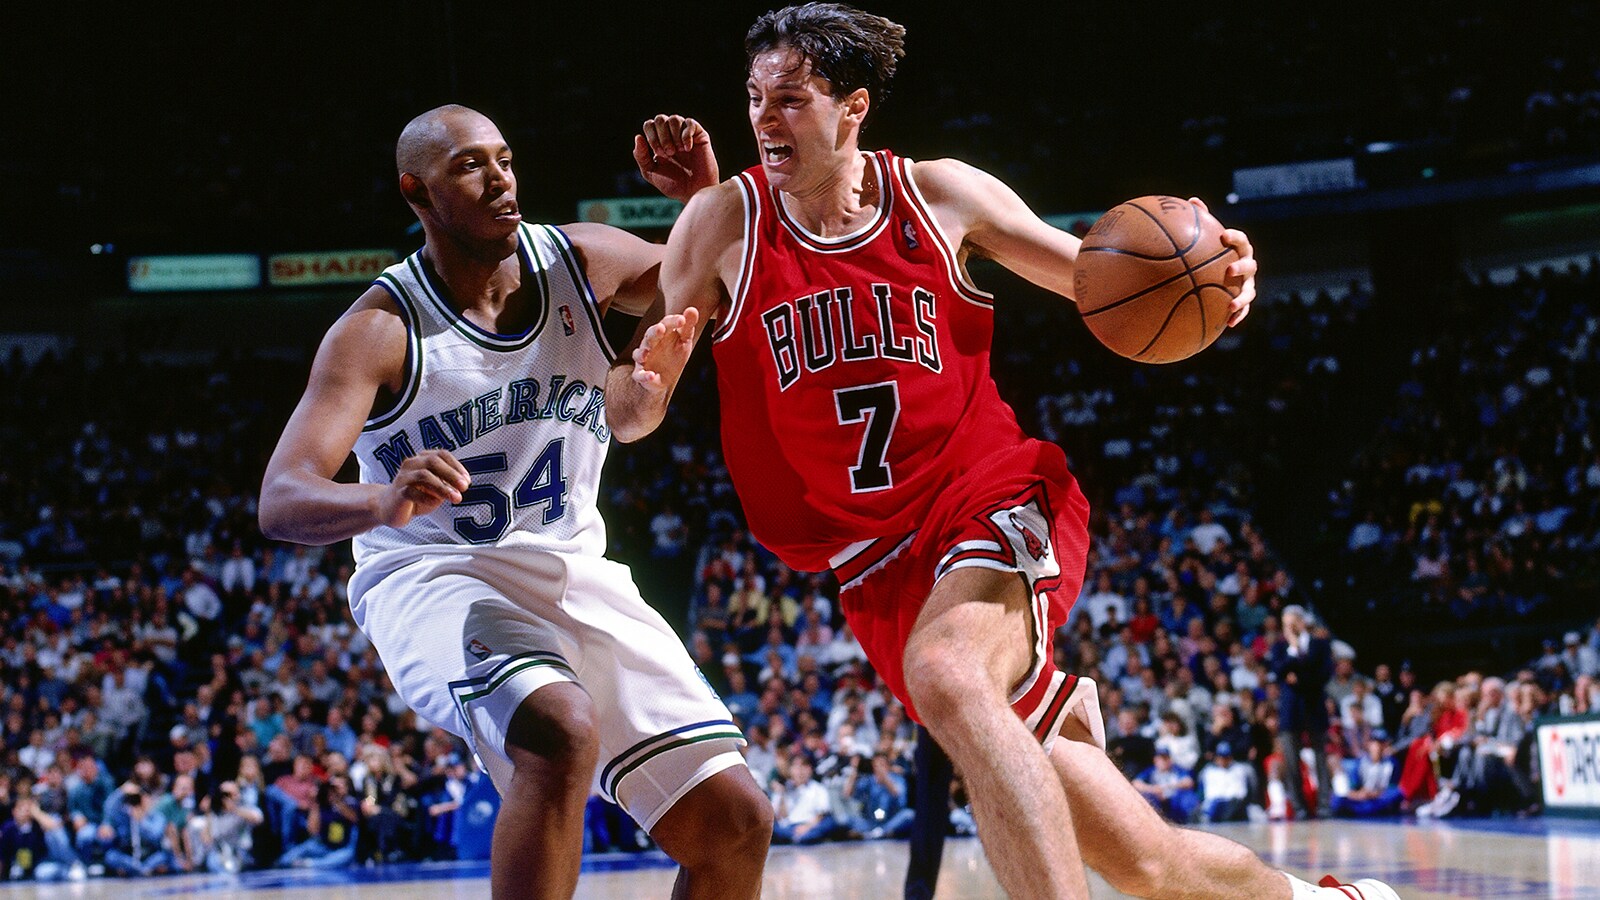 The overlooked star that is Toni Kukoc | Chicago Bulls